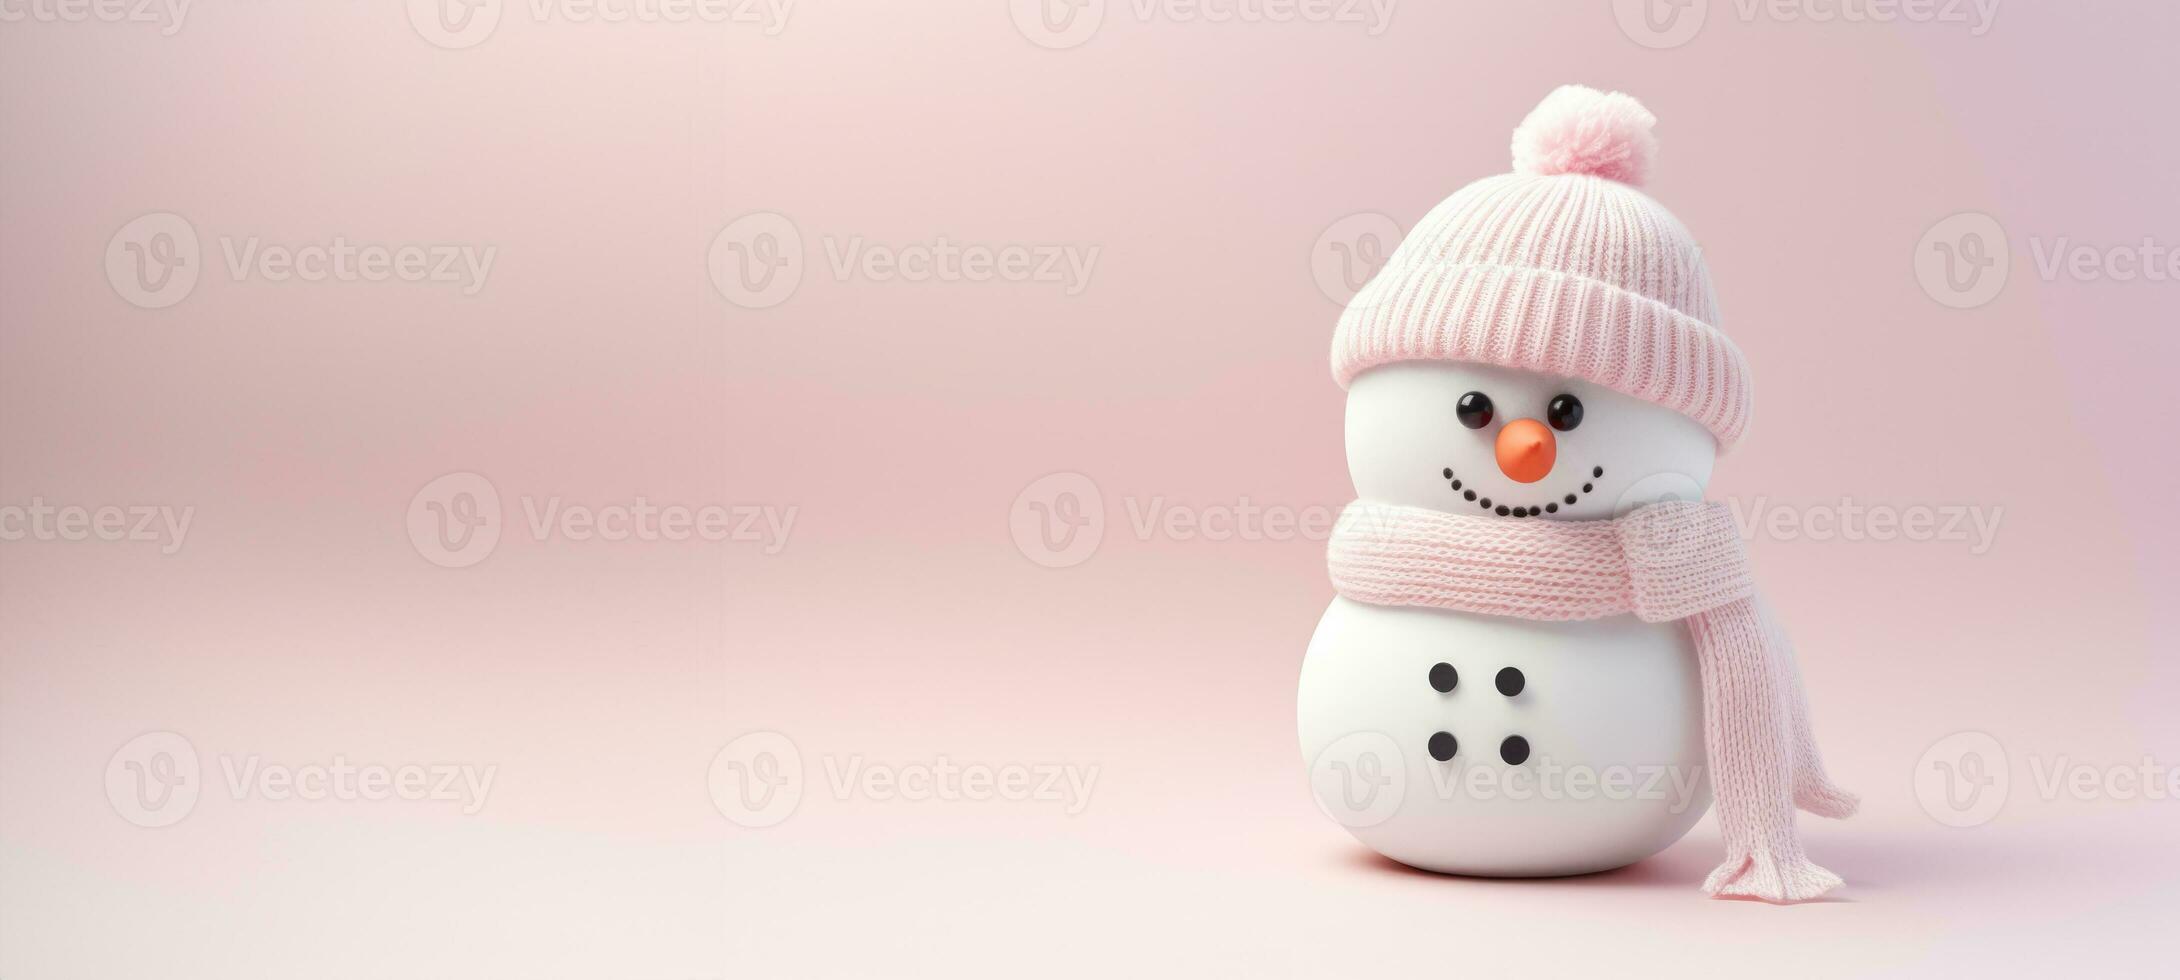 fofa elegante boneco de neve isolado em pastel fundo foto